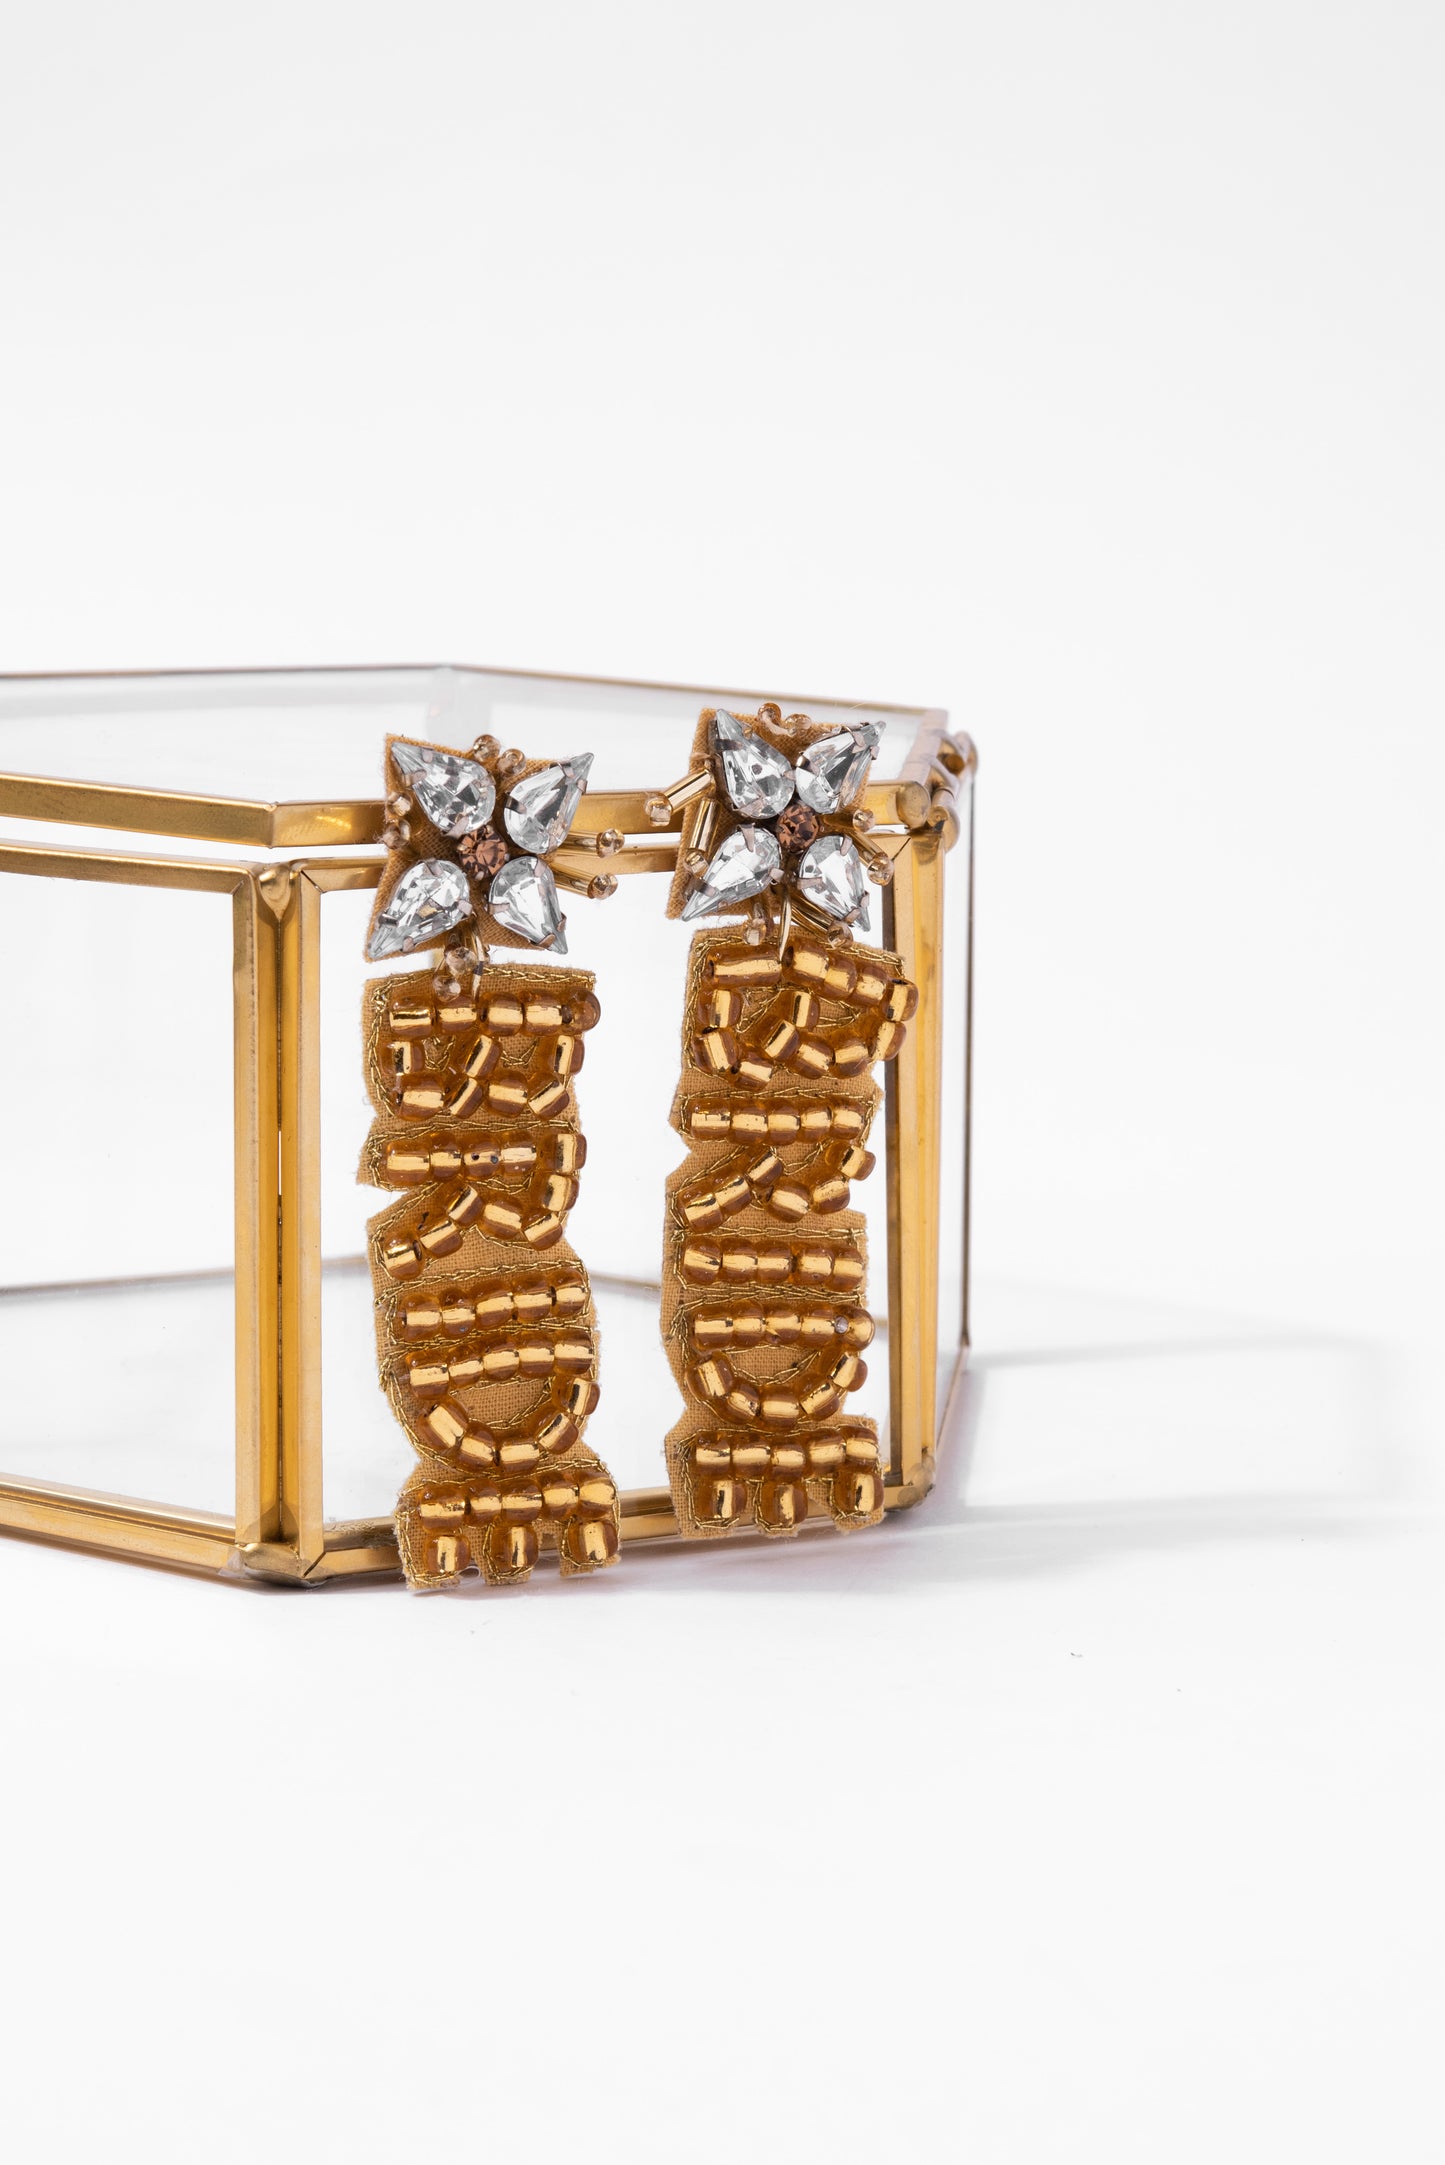 Beaded Bride Rhinestone Dangle Earrings - Gold